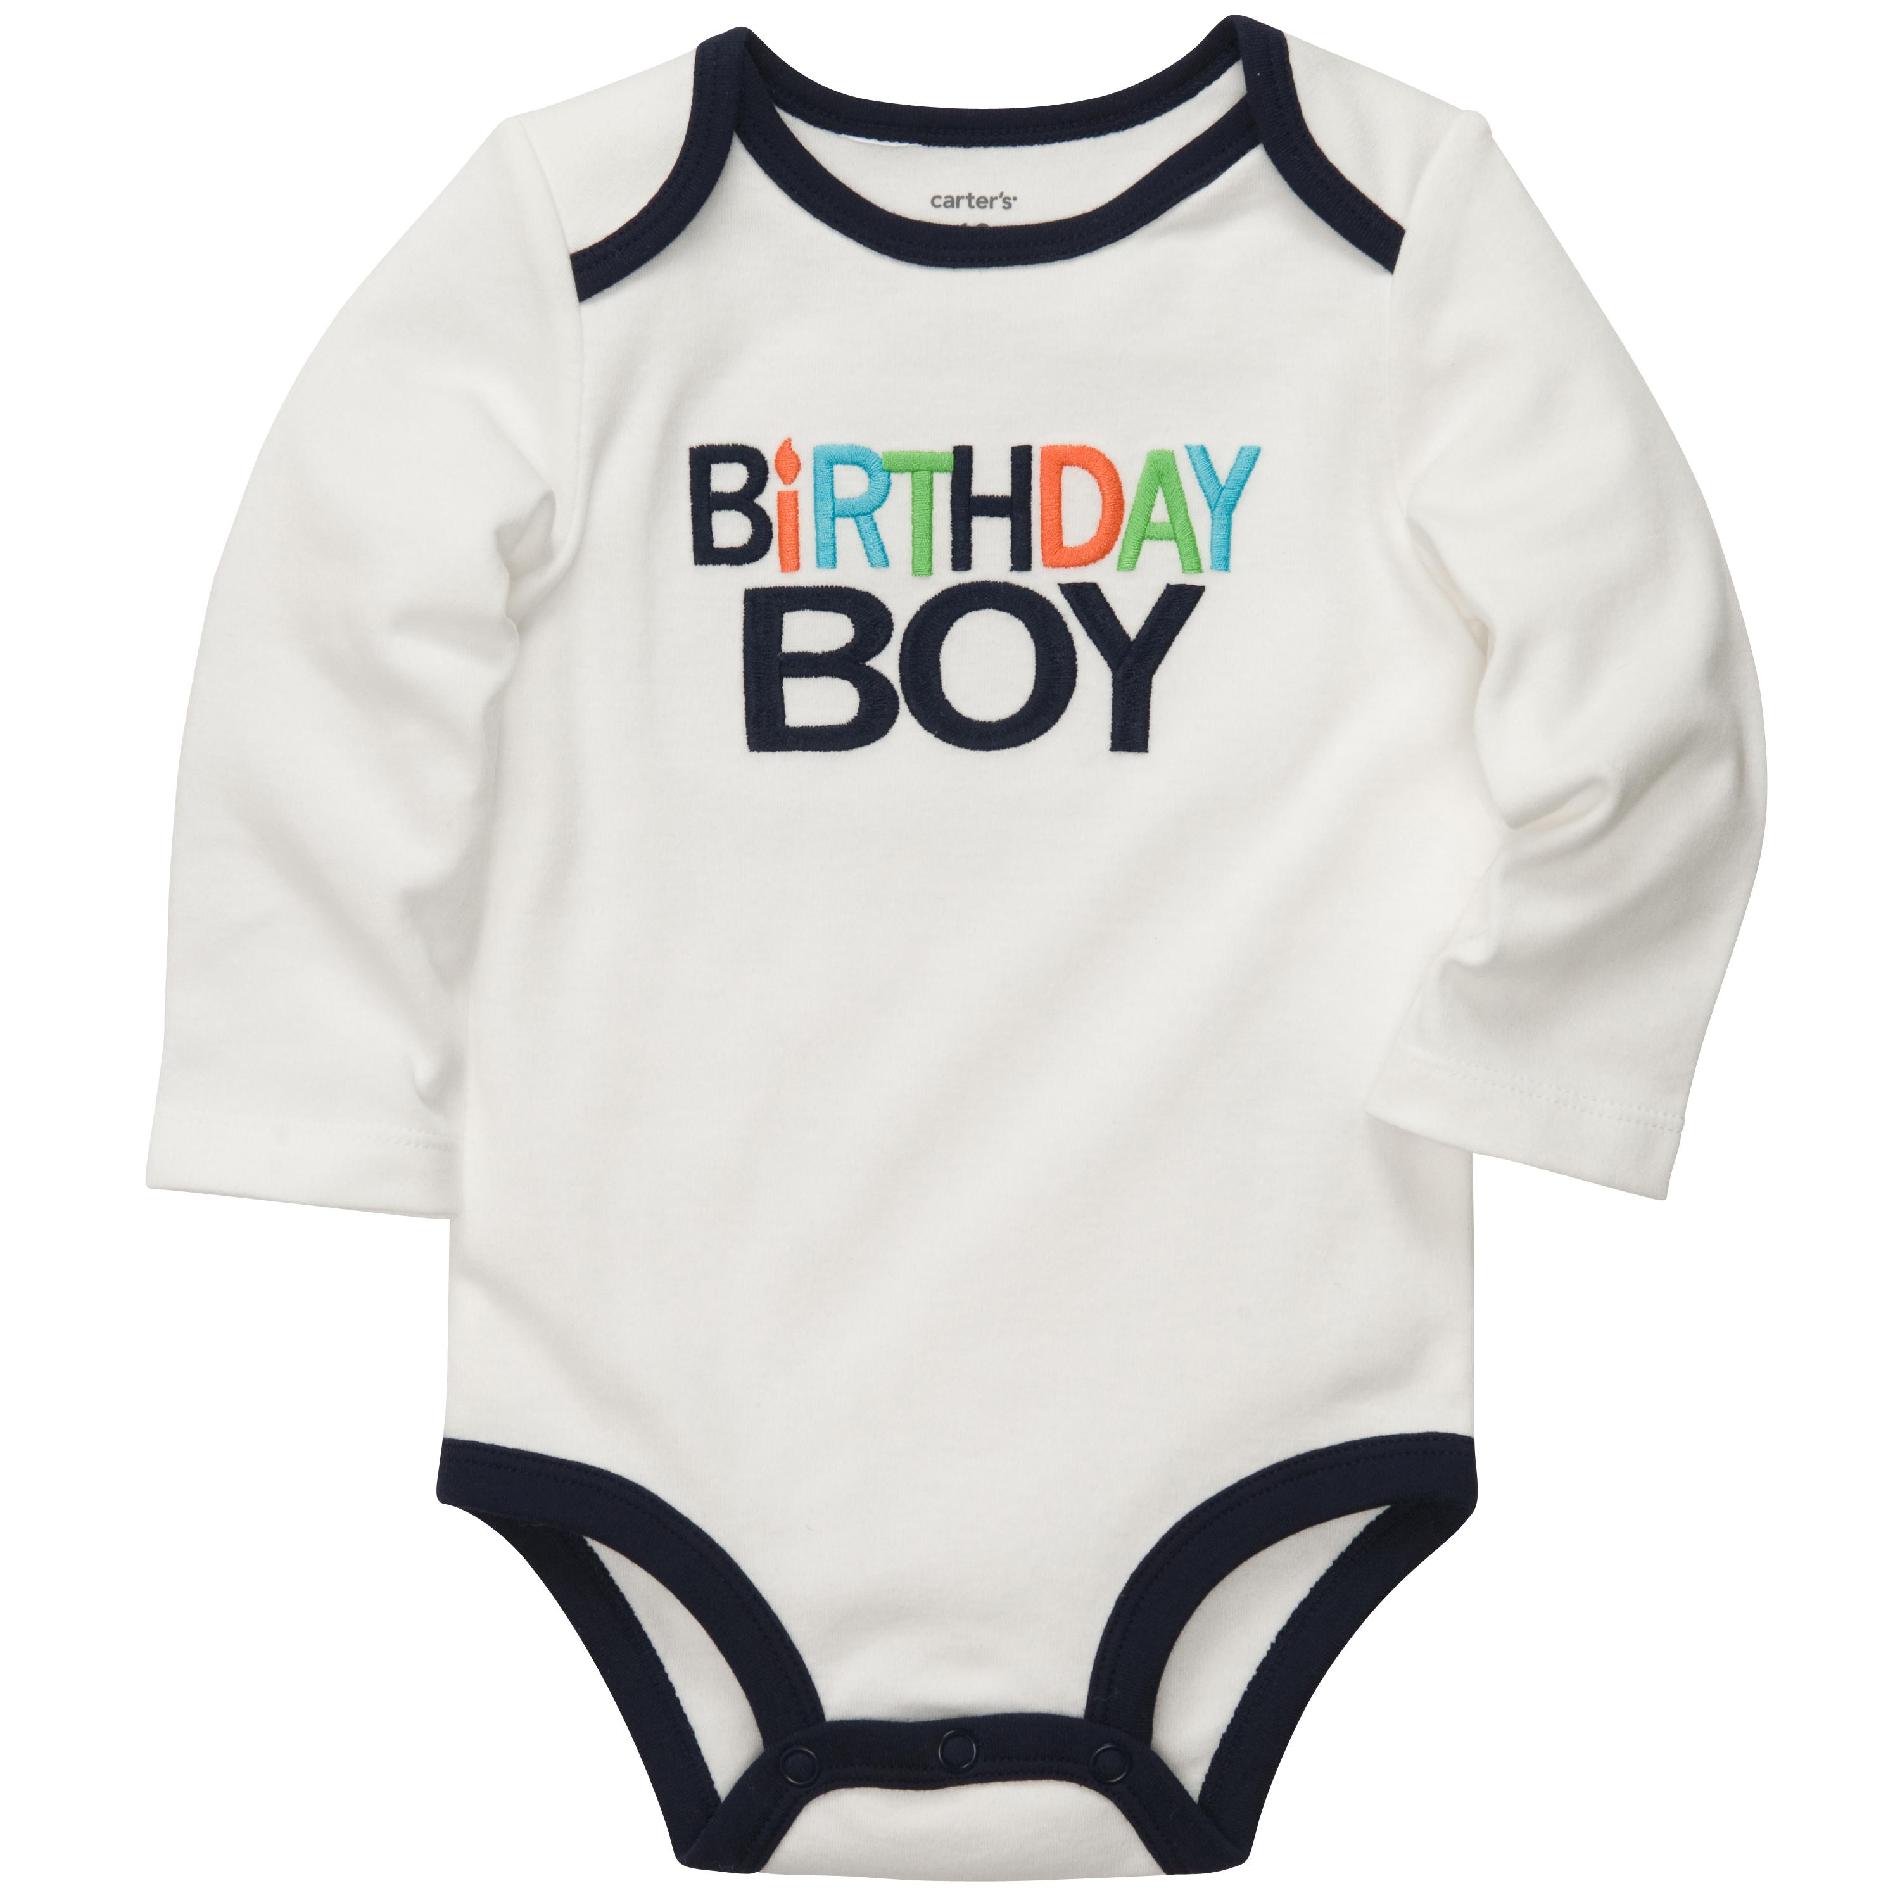 Carter's Infant Boy's Bodysuit - Birthday Boy